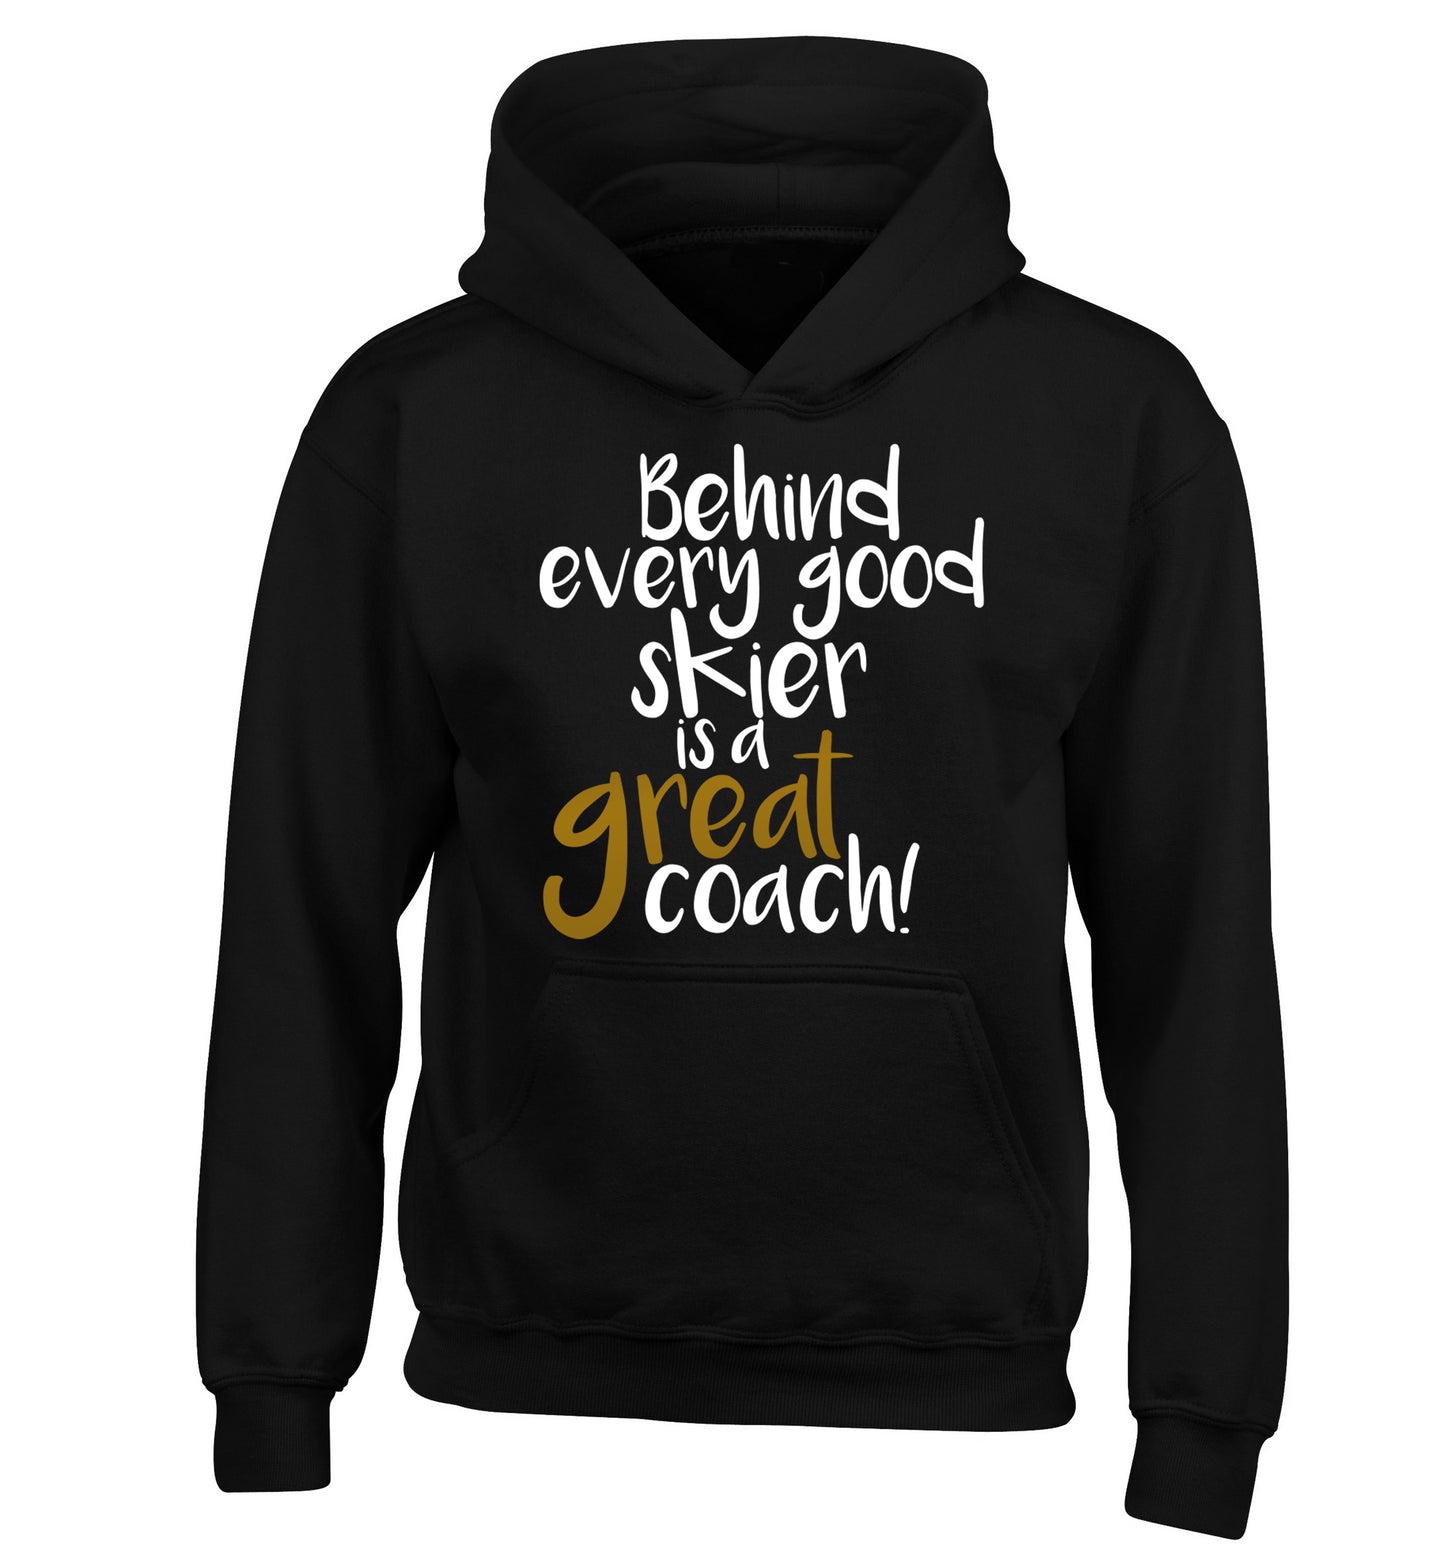 Behind every good skier is a great coach! children's black hoodie 12-14 Years